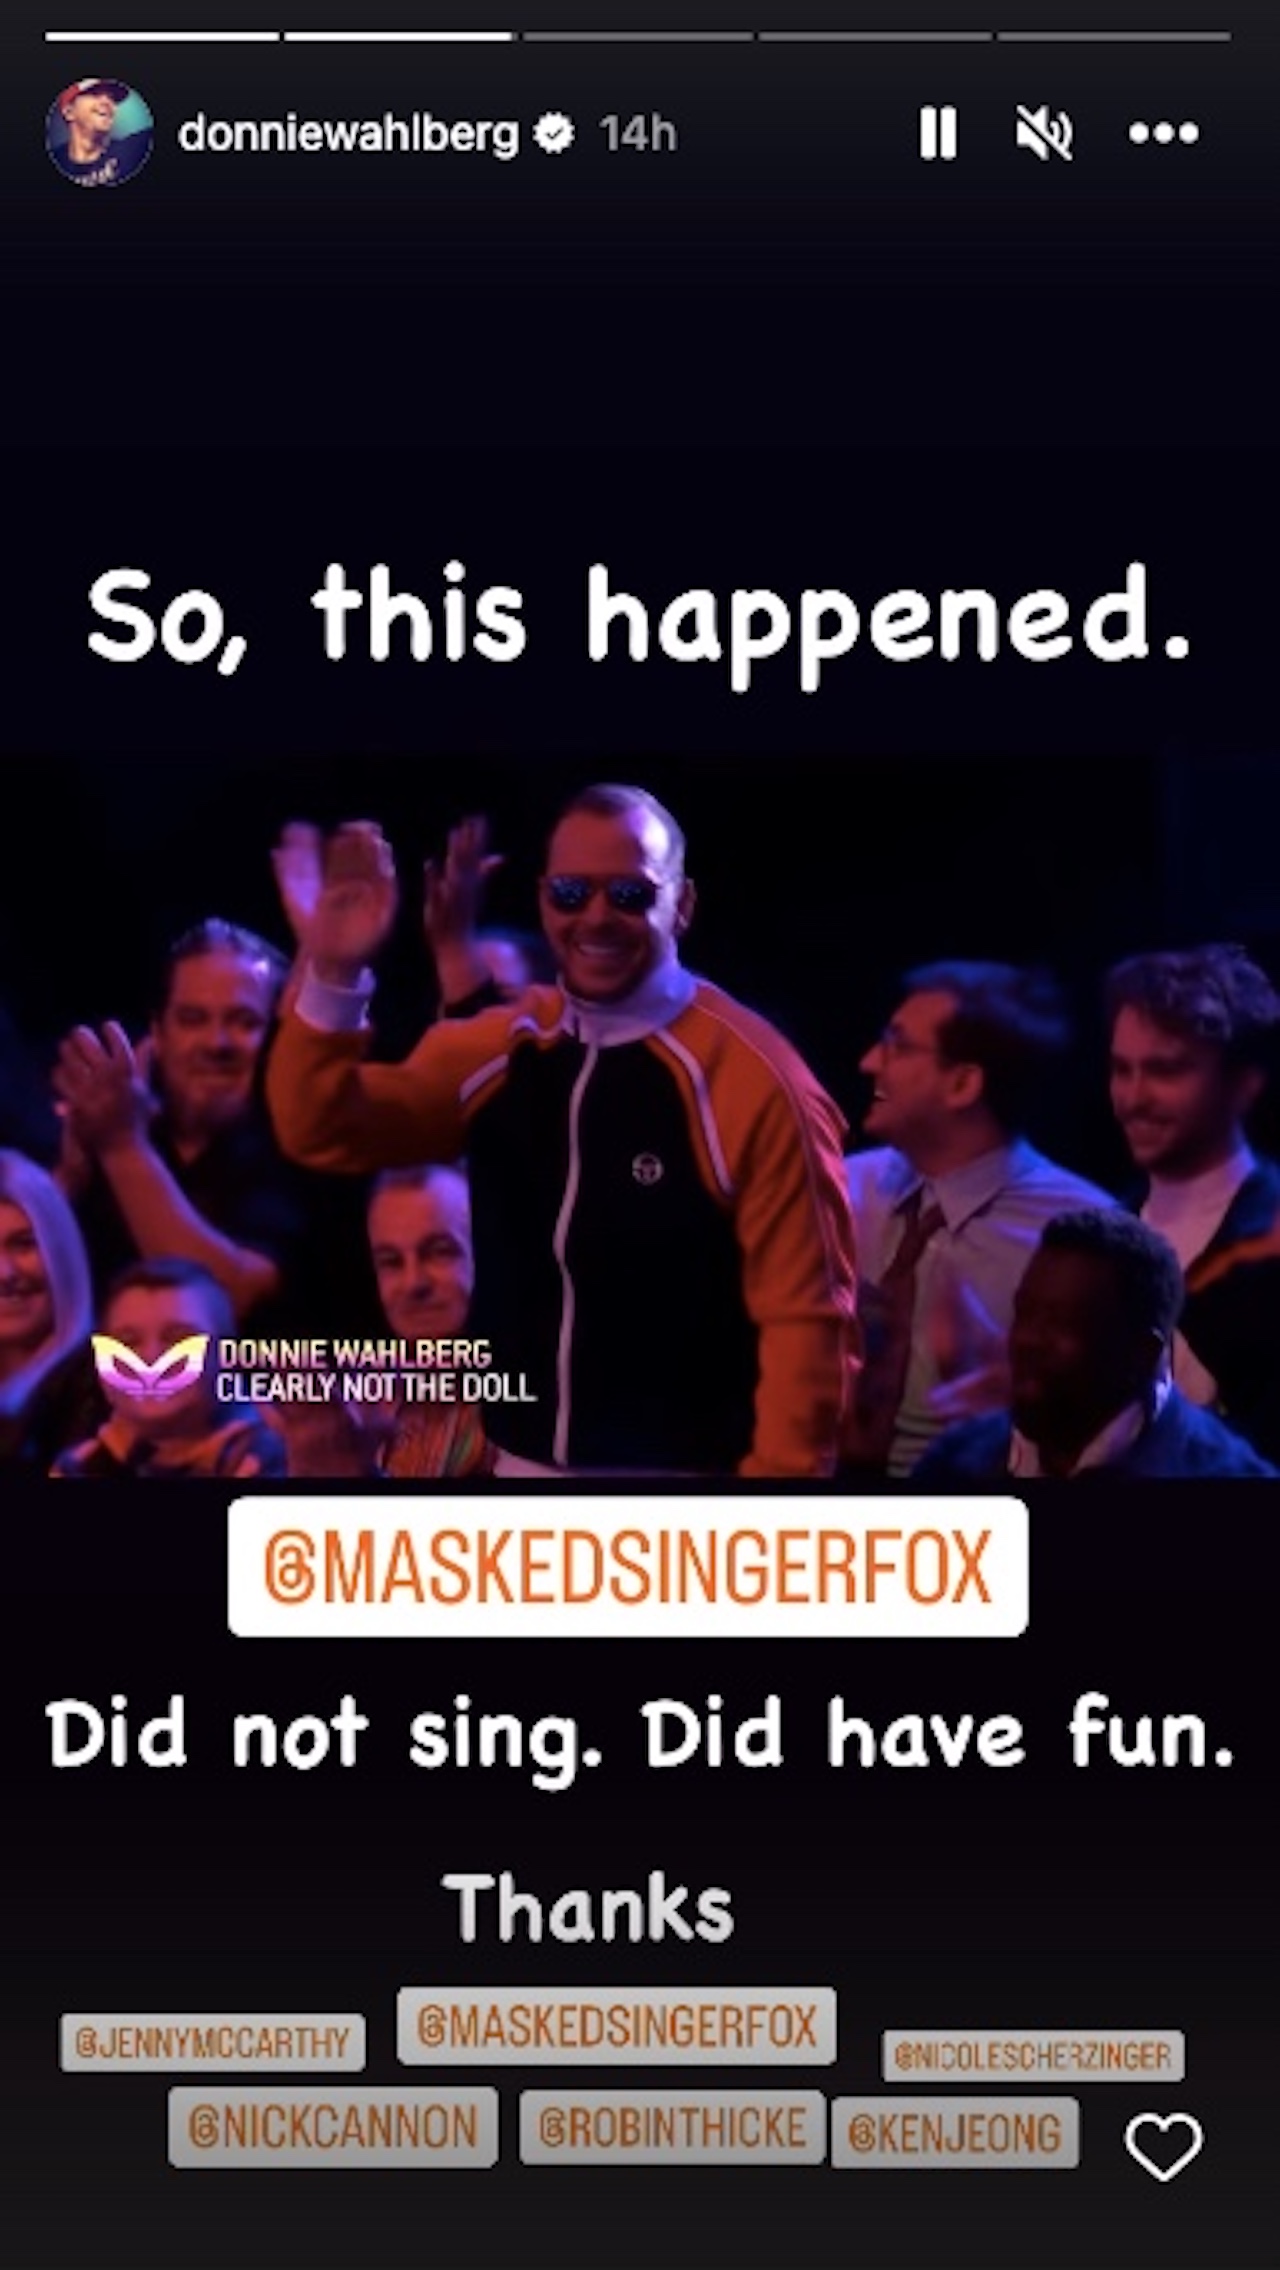 Donnie Wahlberg Masked Singer Instagram